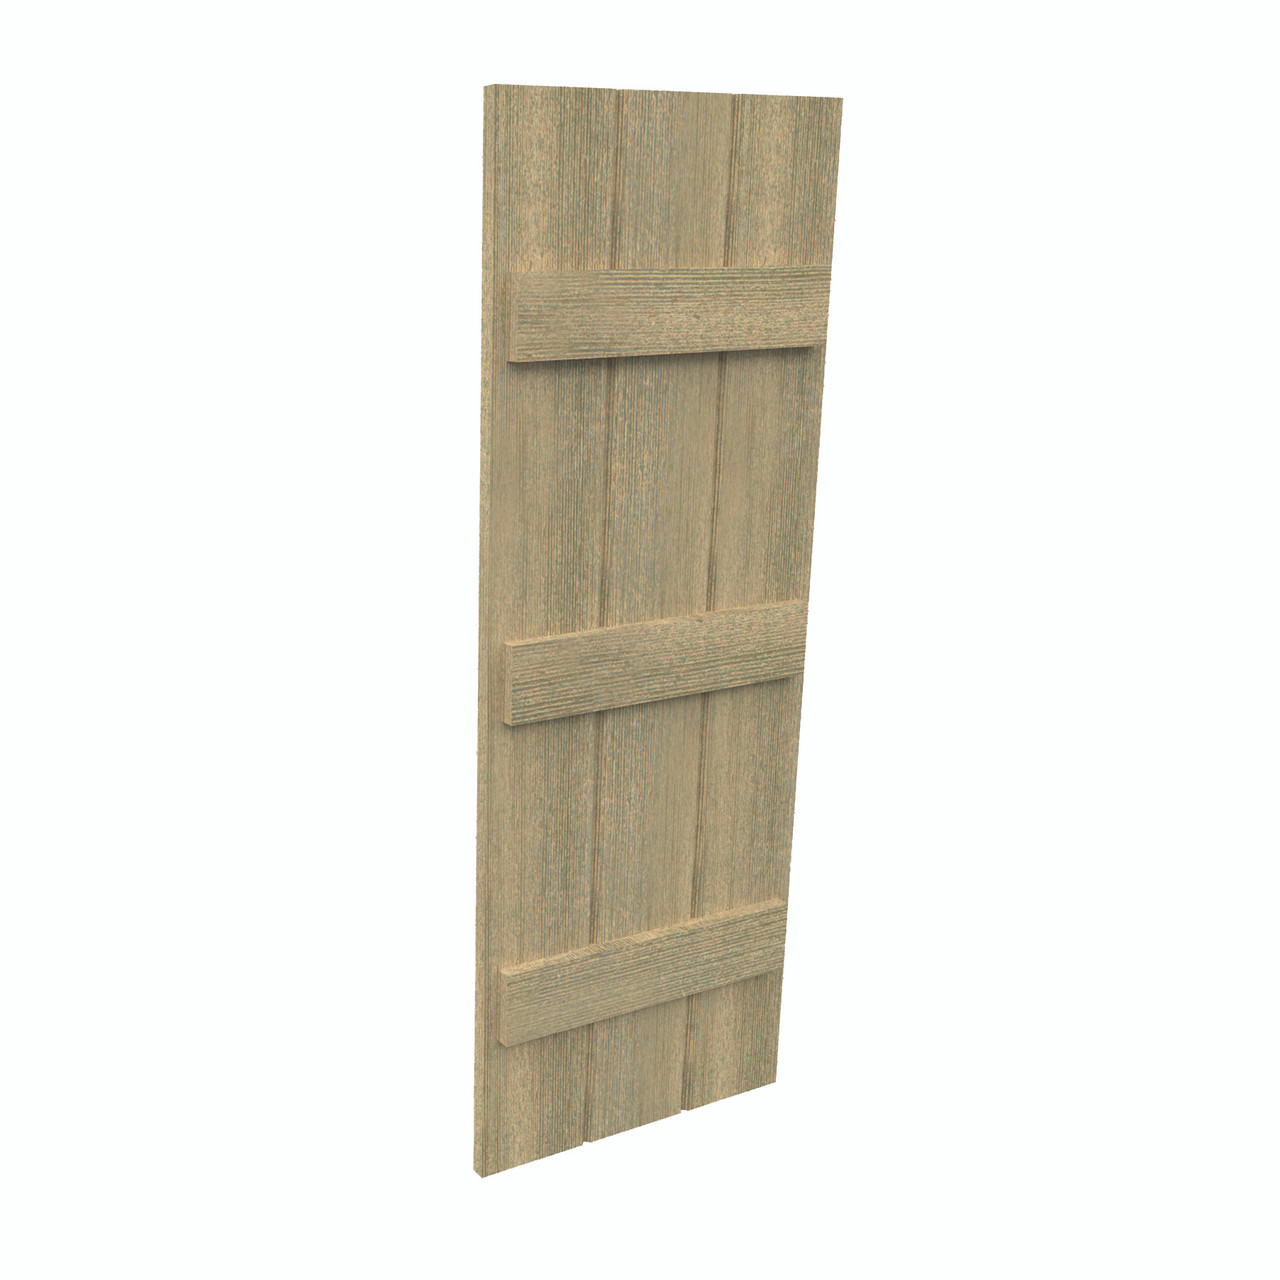 18 inch by 85 inch Plank Shutter with 3-Plank, 3-Batten